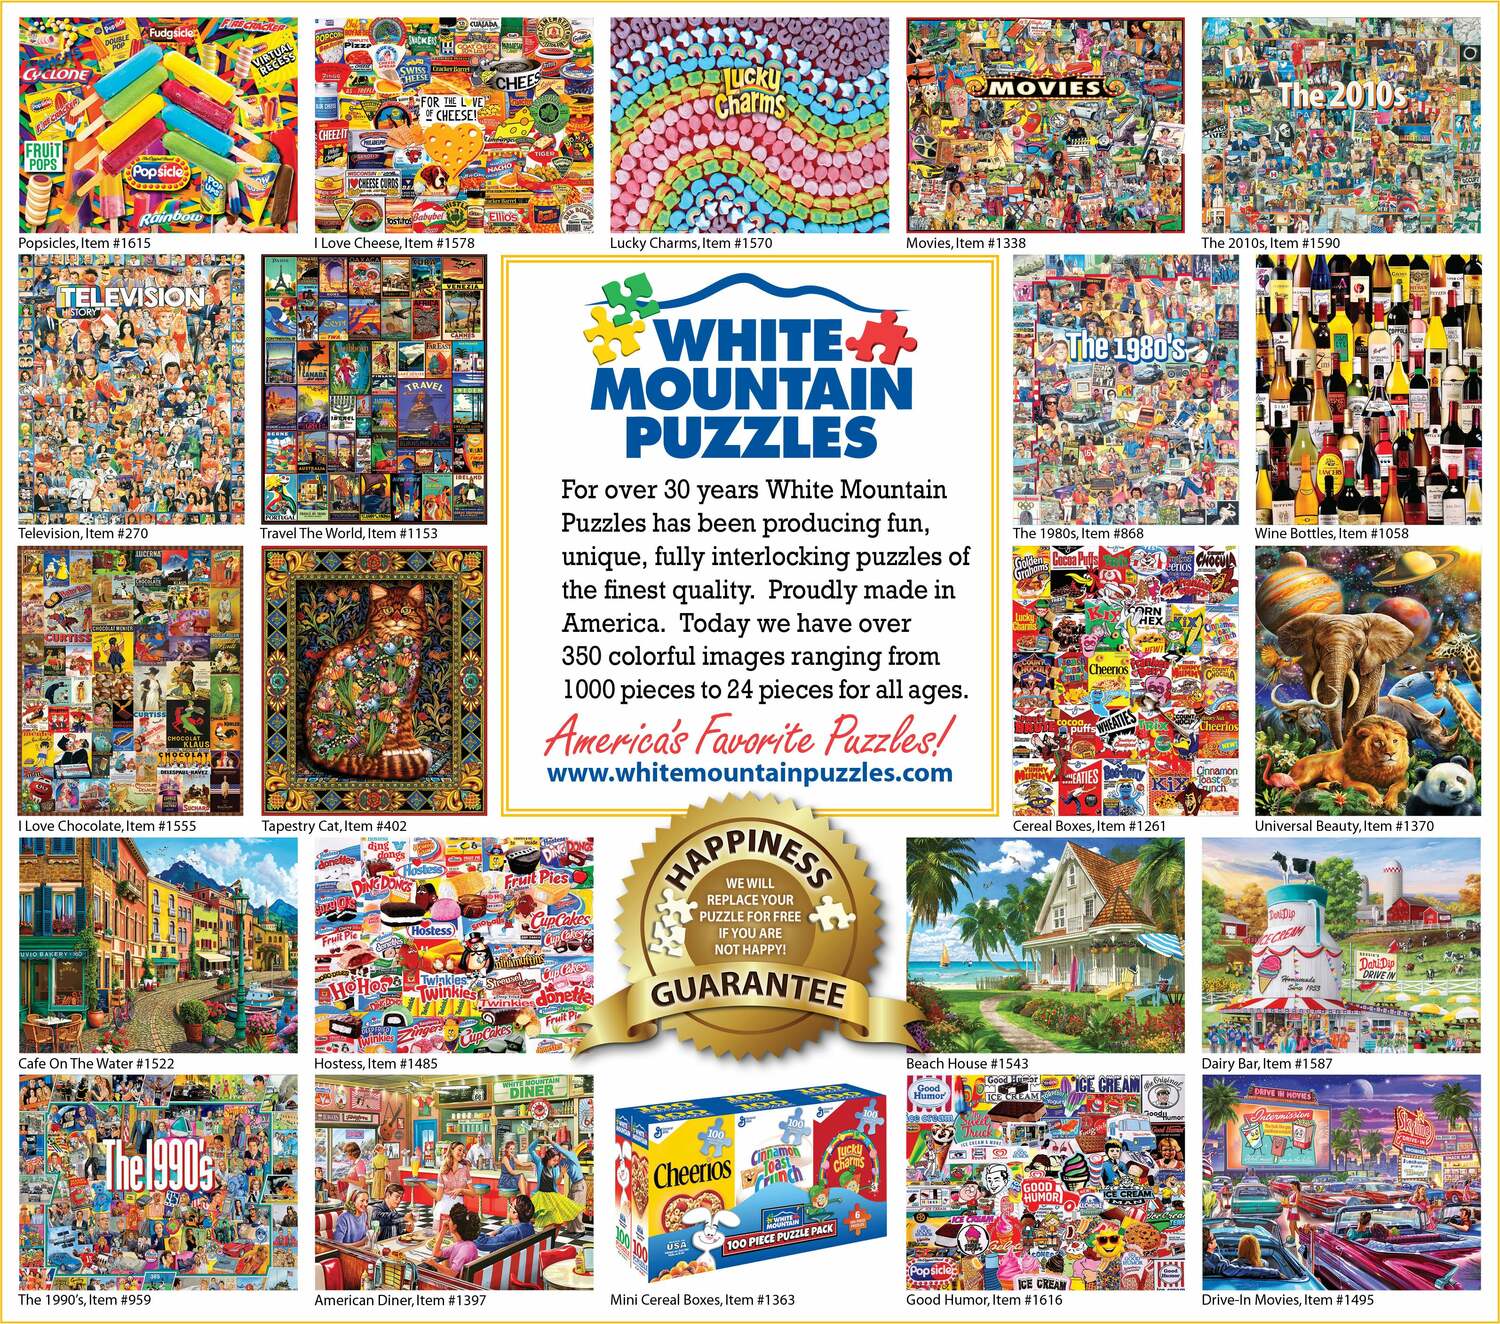 Summer House - 1000 Piece Jigsaw Puzzle